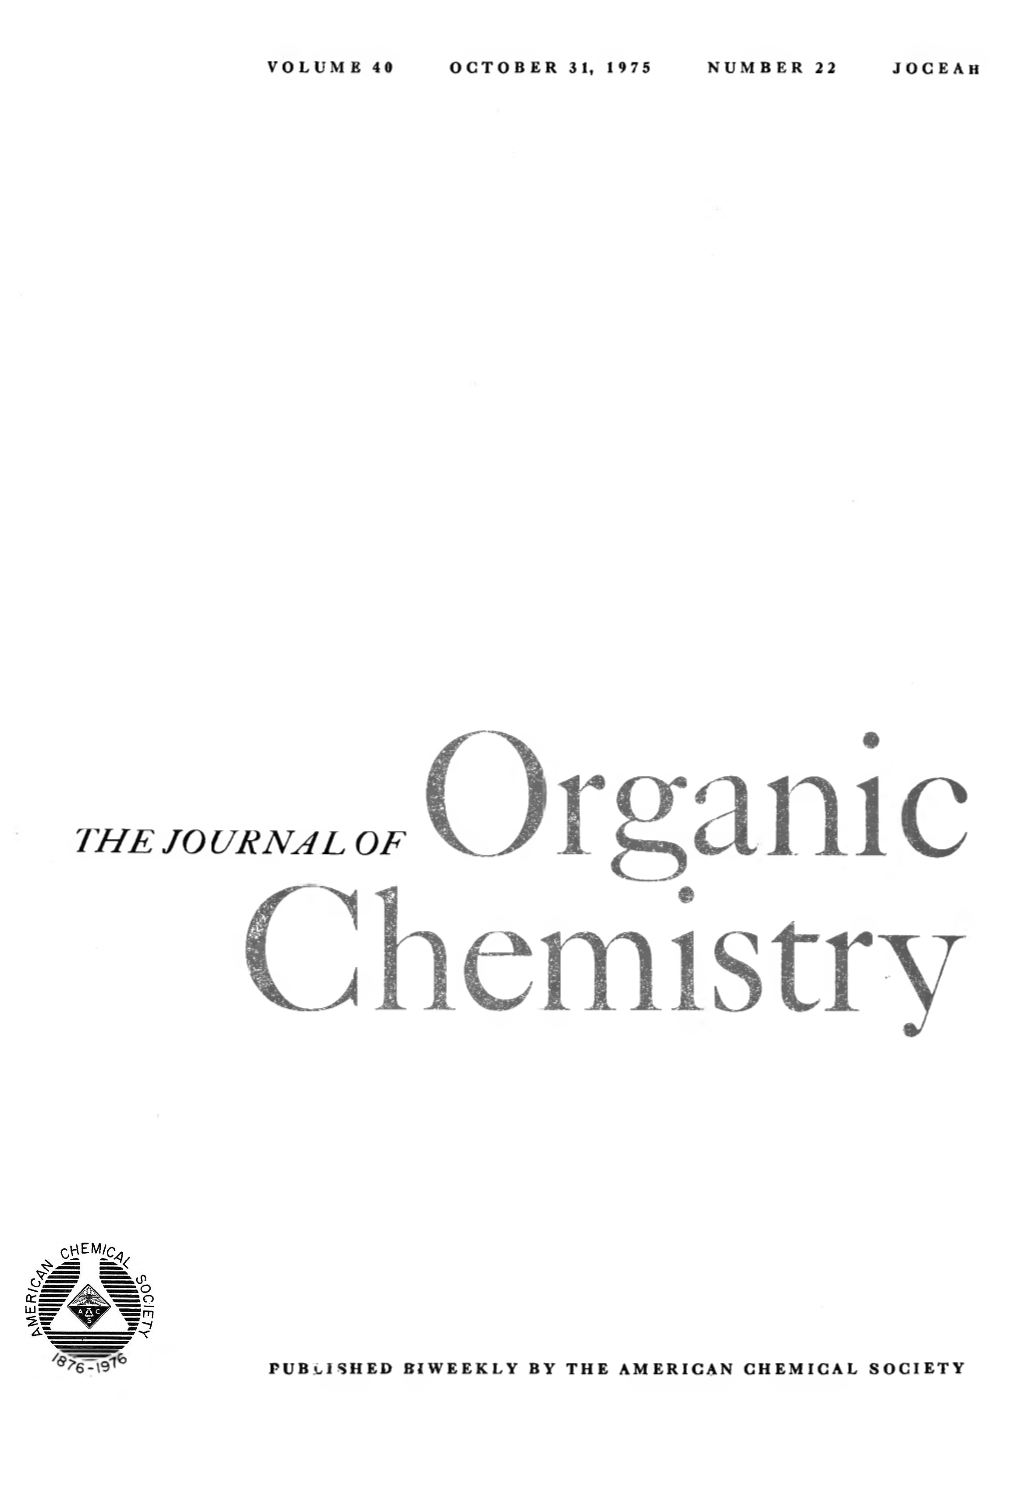 The Jourinal of Organic Chemistry 1975 Volume 40 No.22